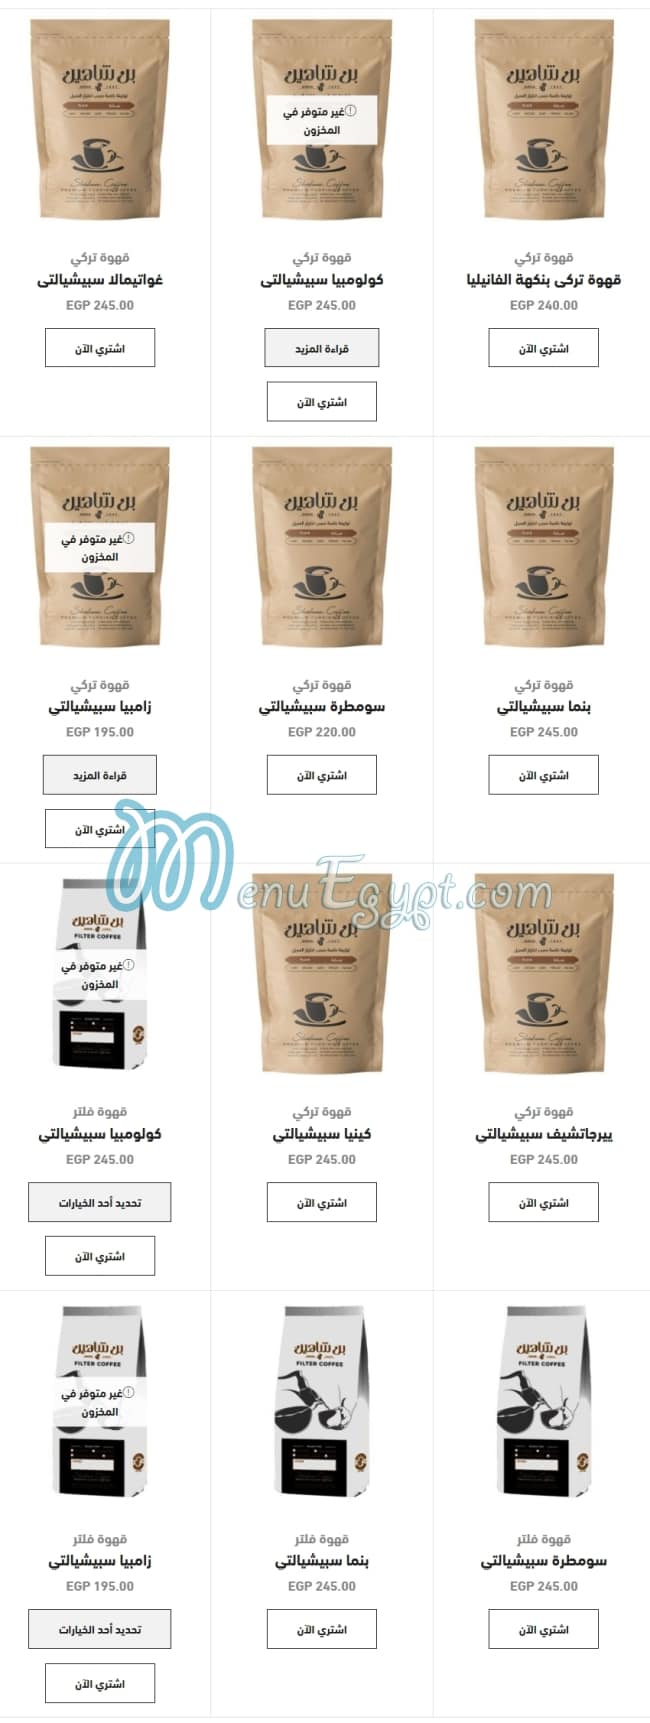 Shaheen Coffe menu prices